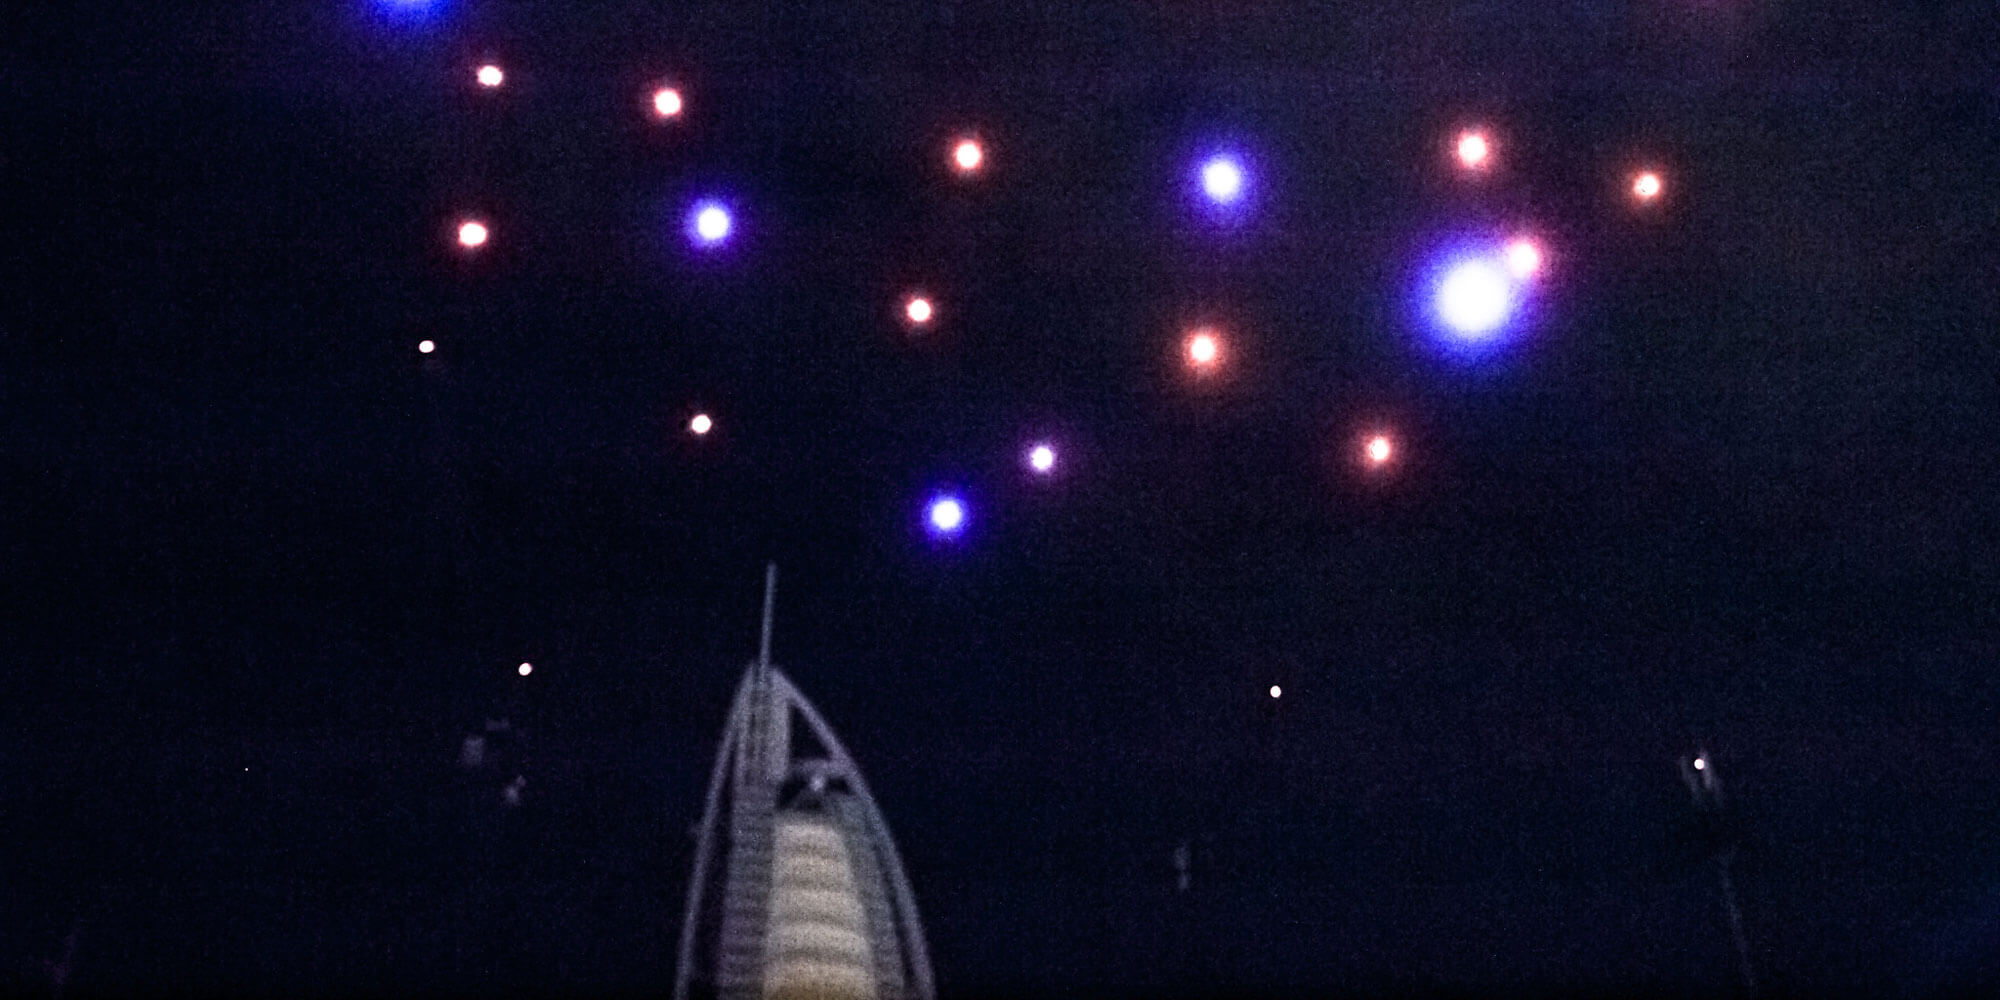 Spaxels in Dubai